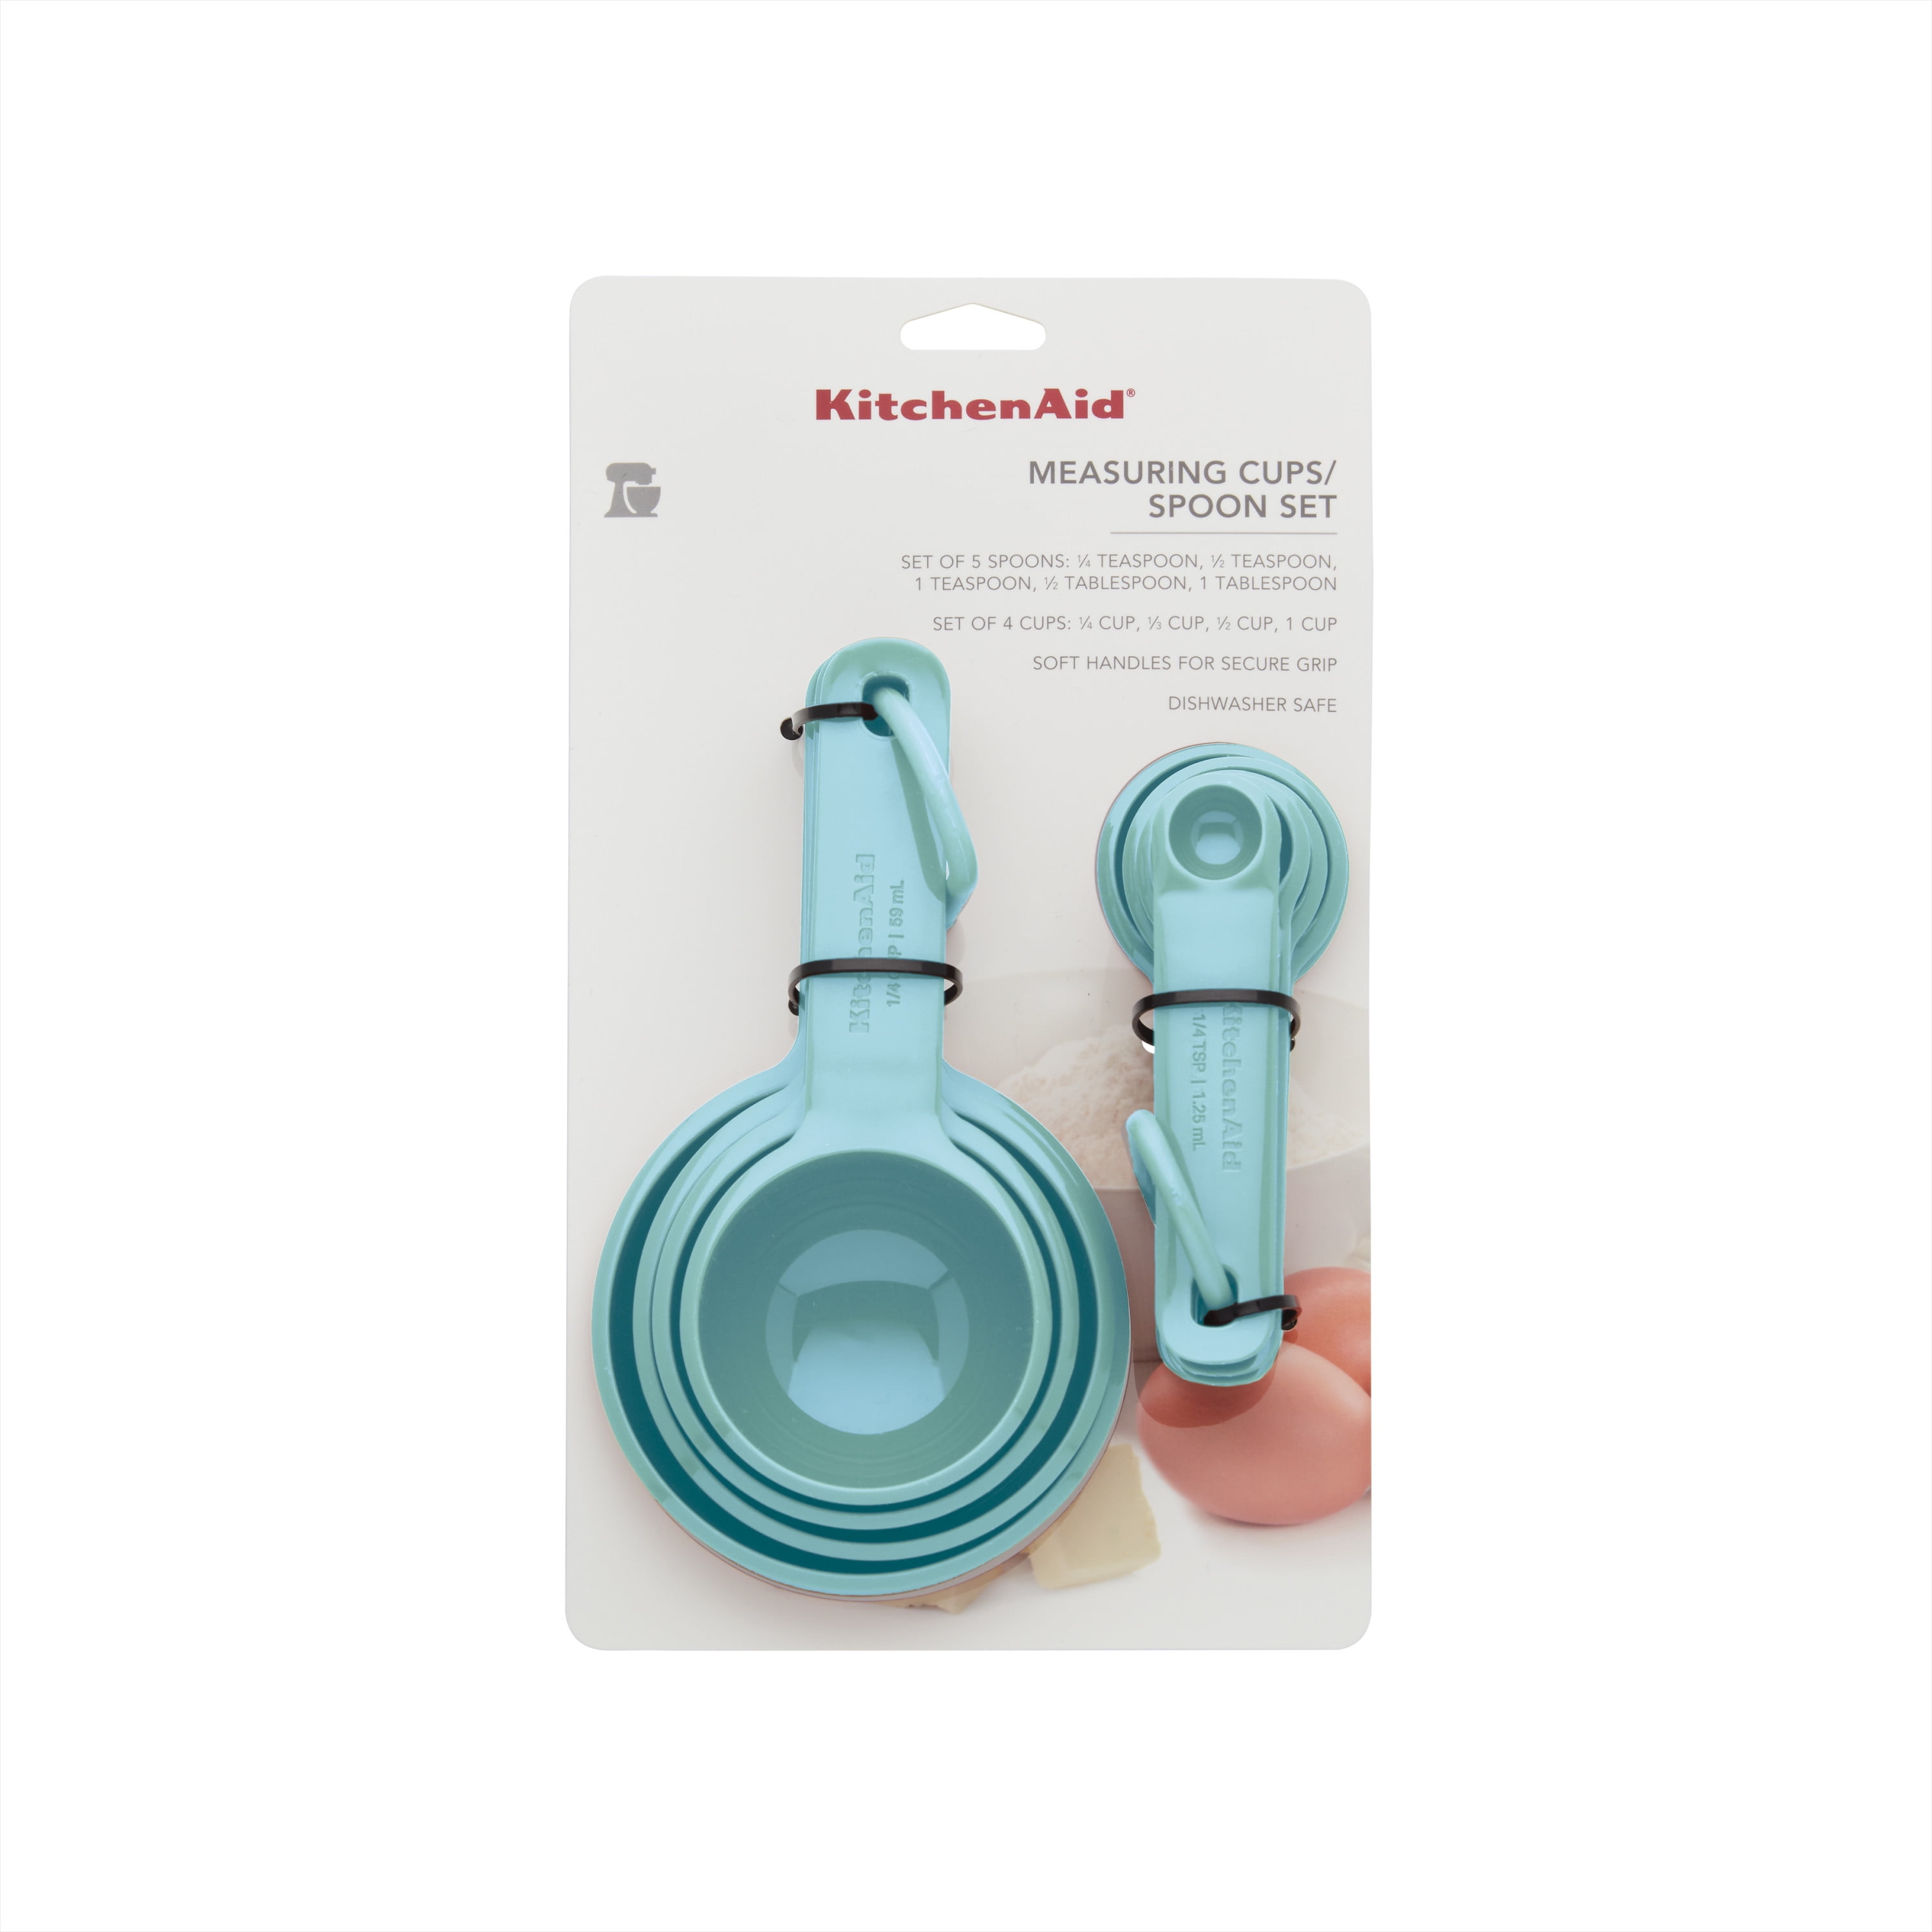  KitchenAid Classic Measuring Cups And Spoons Set, Set of 9, Aqua  Sky/Black: Home & Kitchen